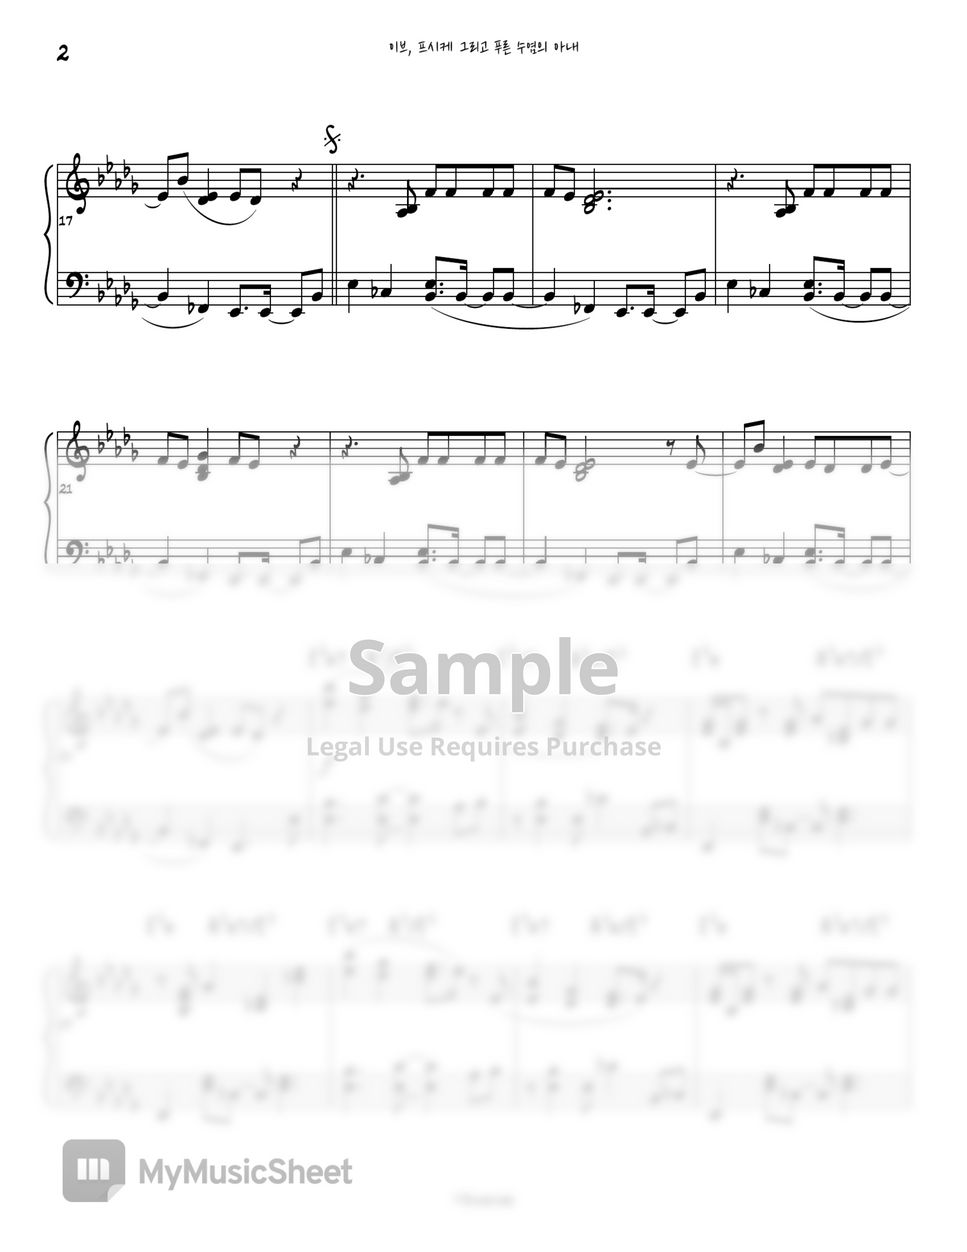 LESSERAFIM (르세라핌) - 이브, 프시케 그리고 푸른 수염의 아내 (Eve, Psyche & The Bluebeard's wife) (piano sheet / 피아노 악보) by Divingtone